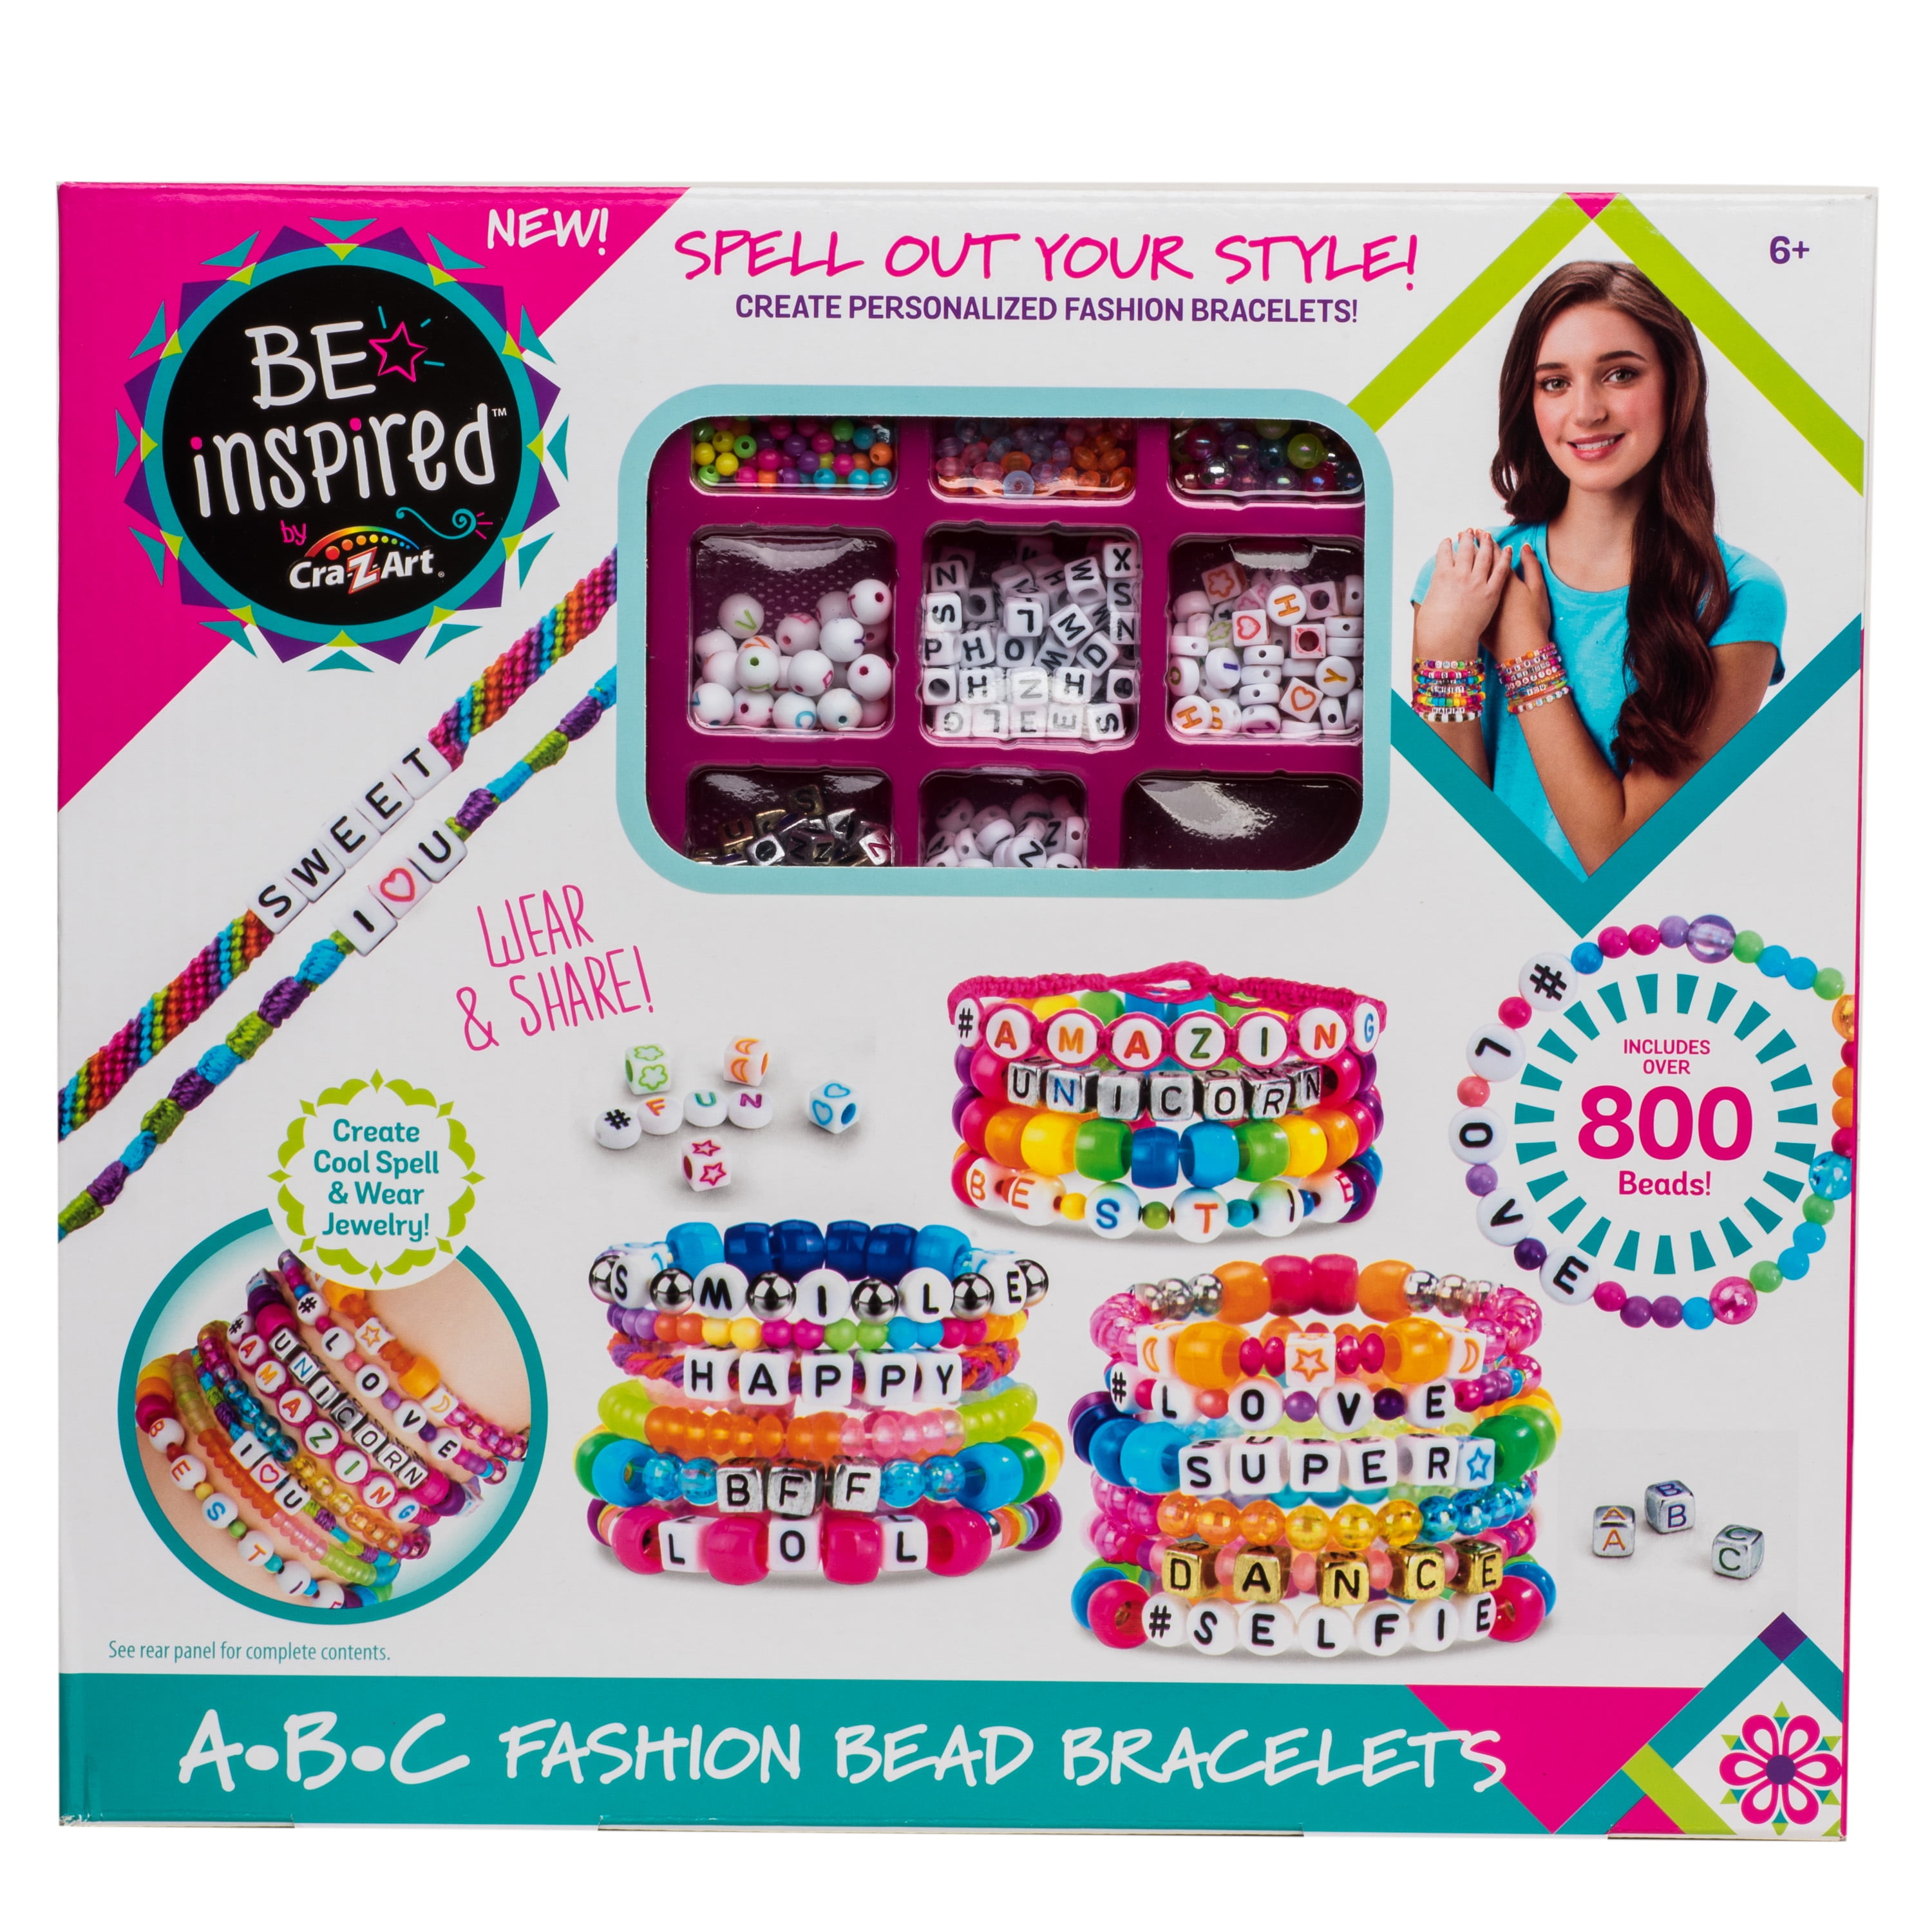 Cra-Z-Art Be Inspired ABC Fashion Bead Bracelet Studio, 800+ Multi-Color Beads, Easter Gift